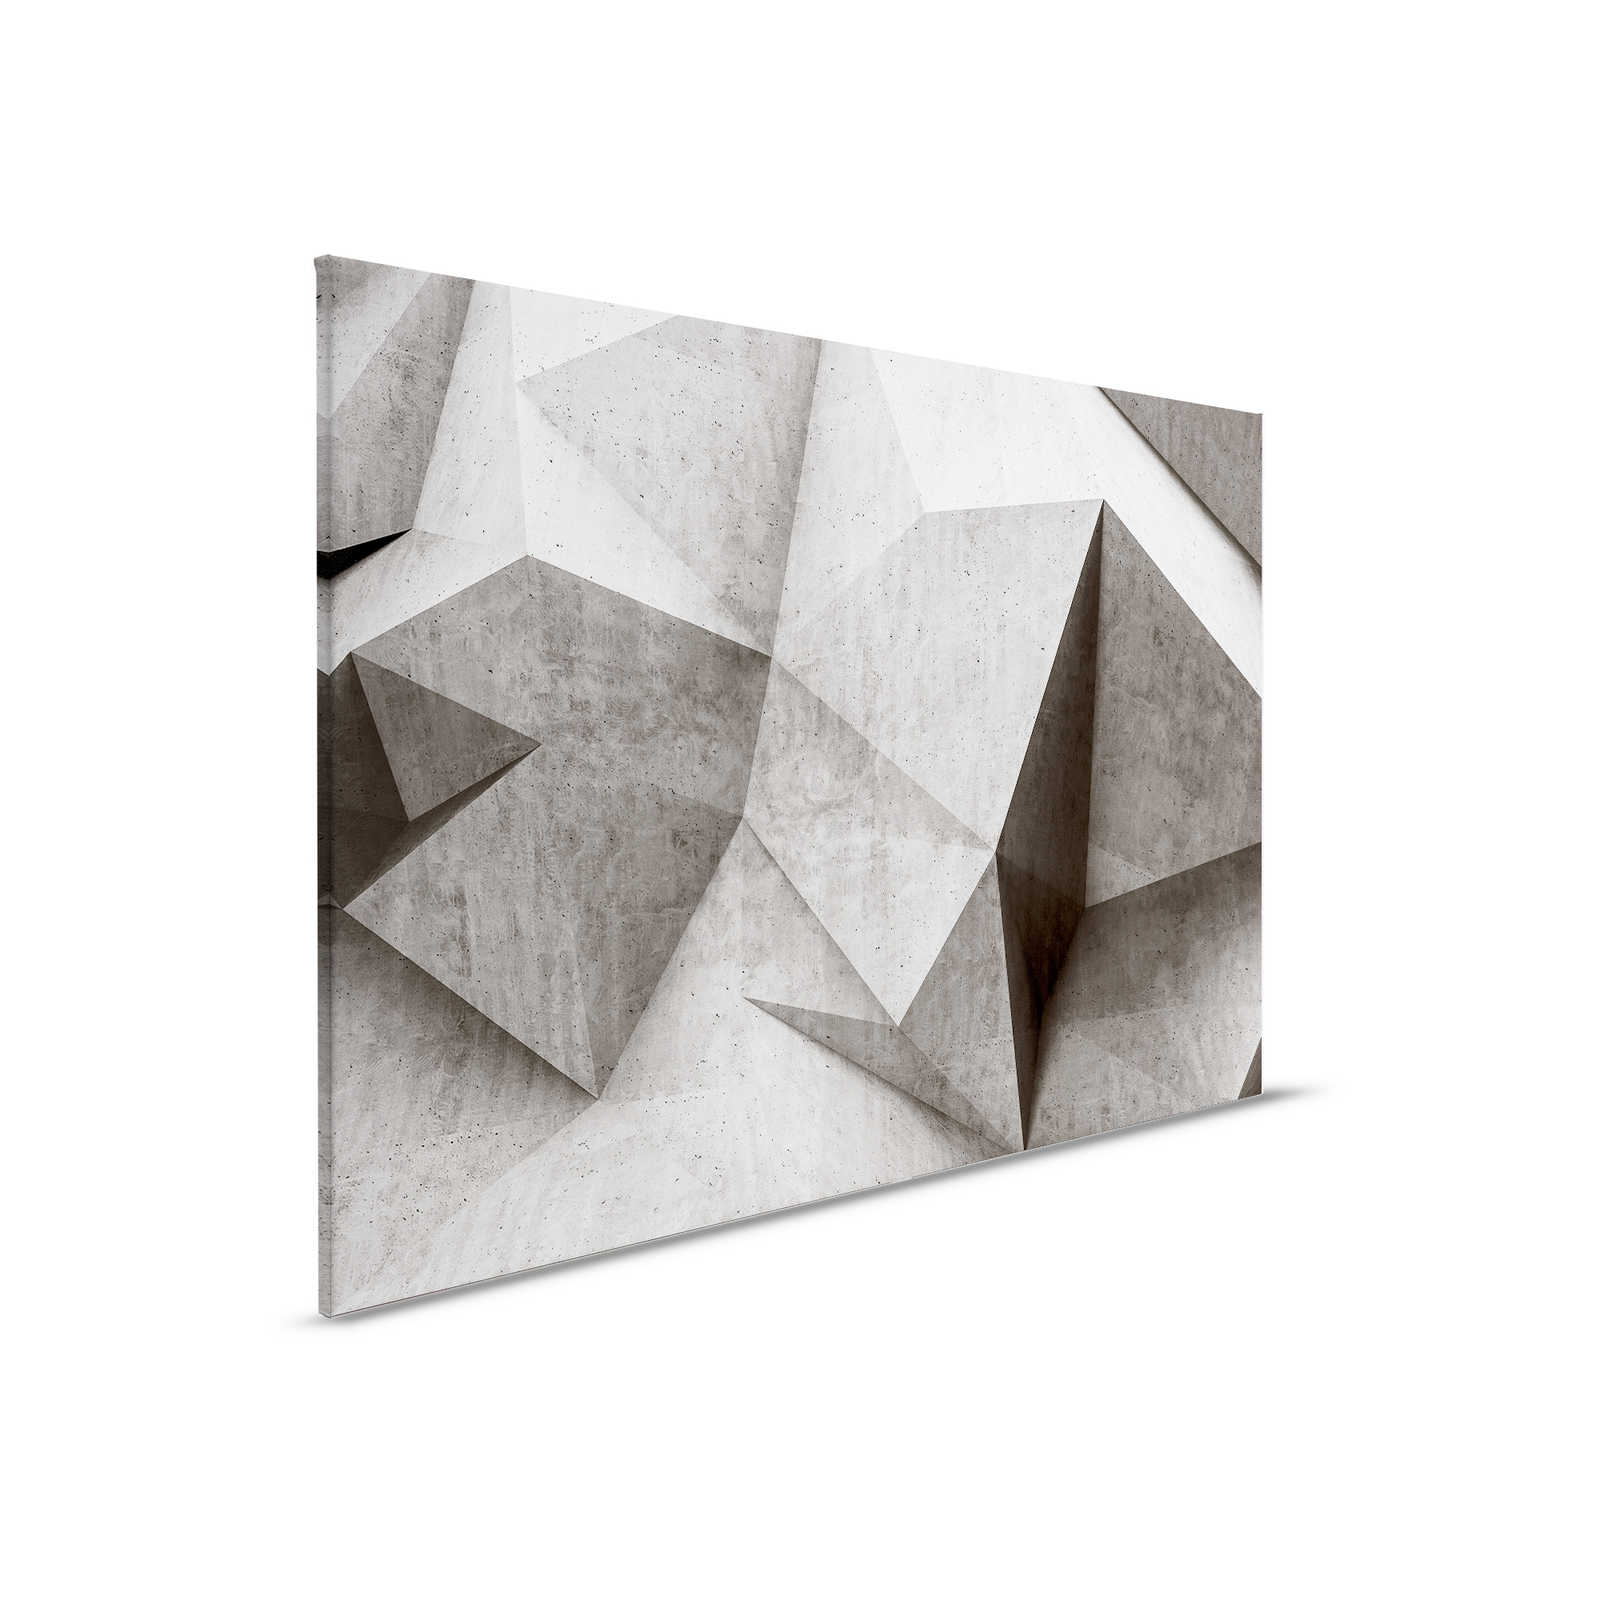 Boulder 1 - Coole 3D Beton-Polygone Leinwandbild – 0,90 m x 0,60 m
